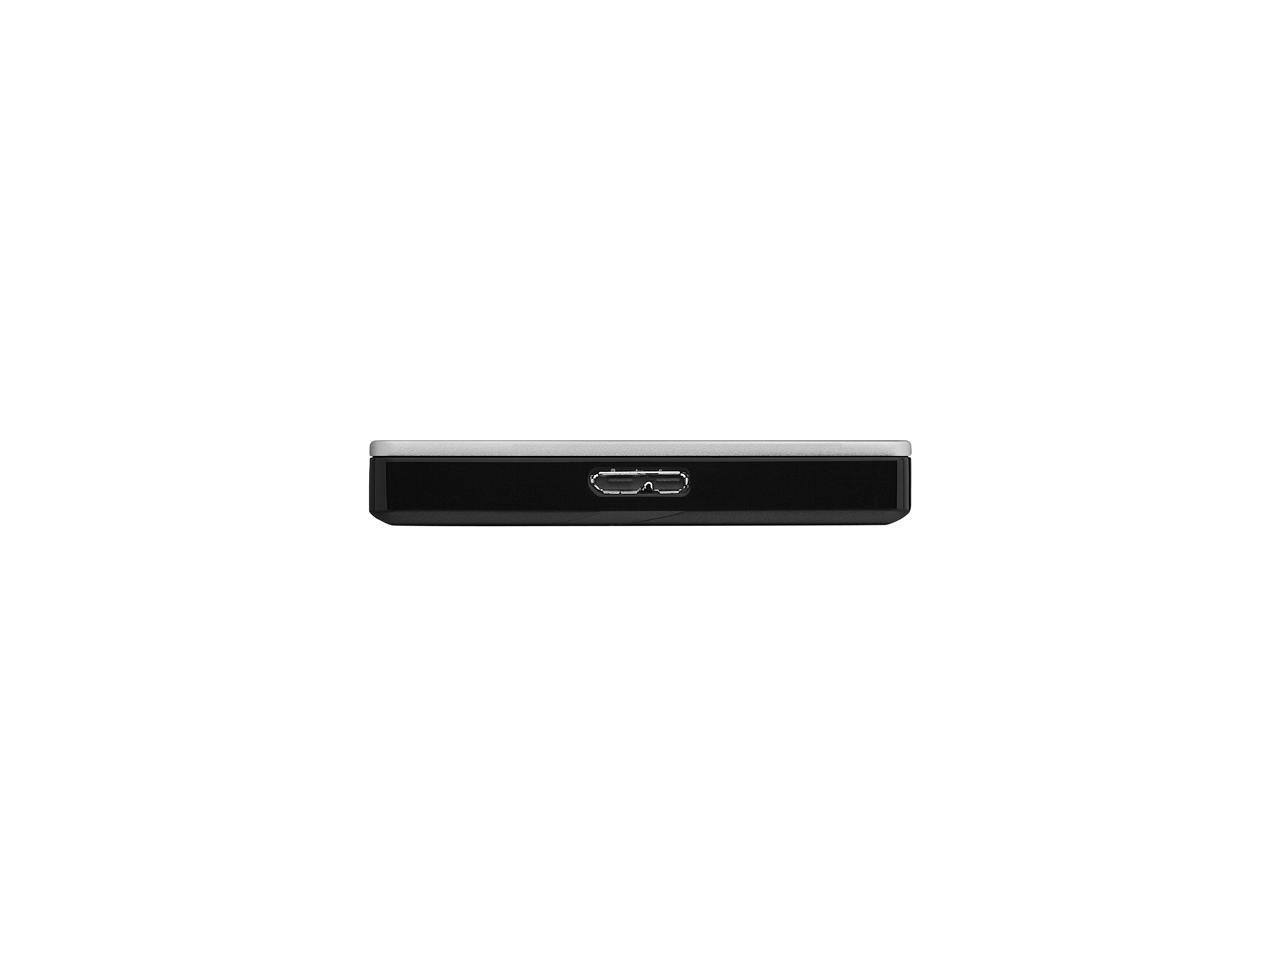 Seagate Backup Plus Slim 2TB USB 3.0 Portable External Hard Drive - STDR2000101 (Silver)